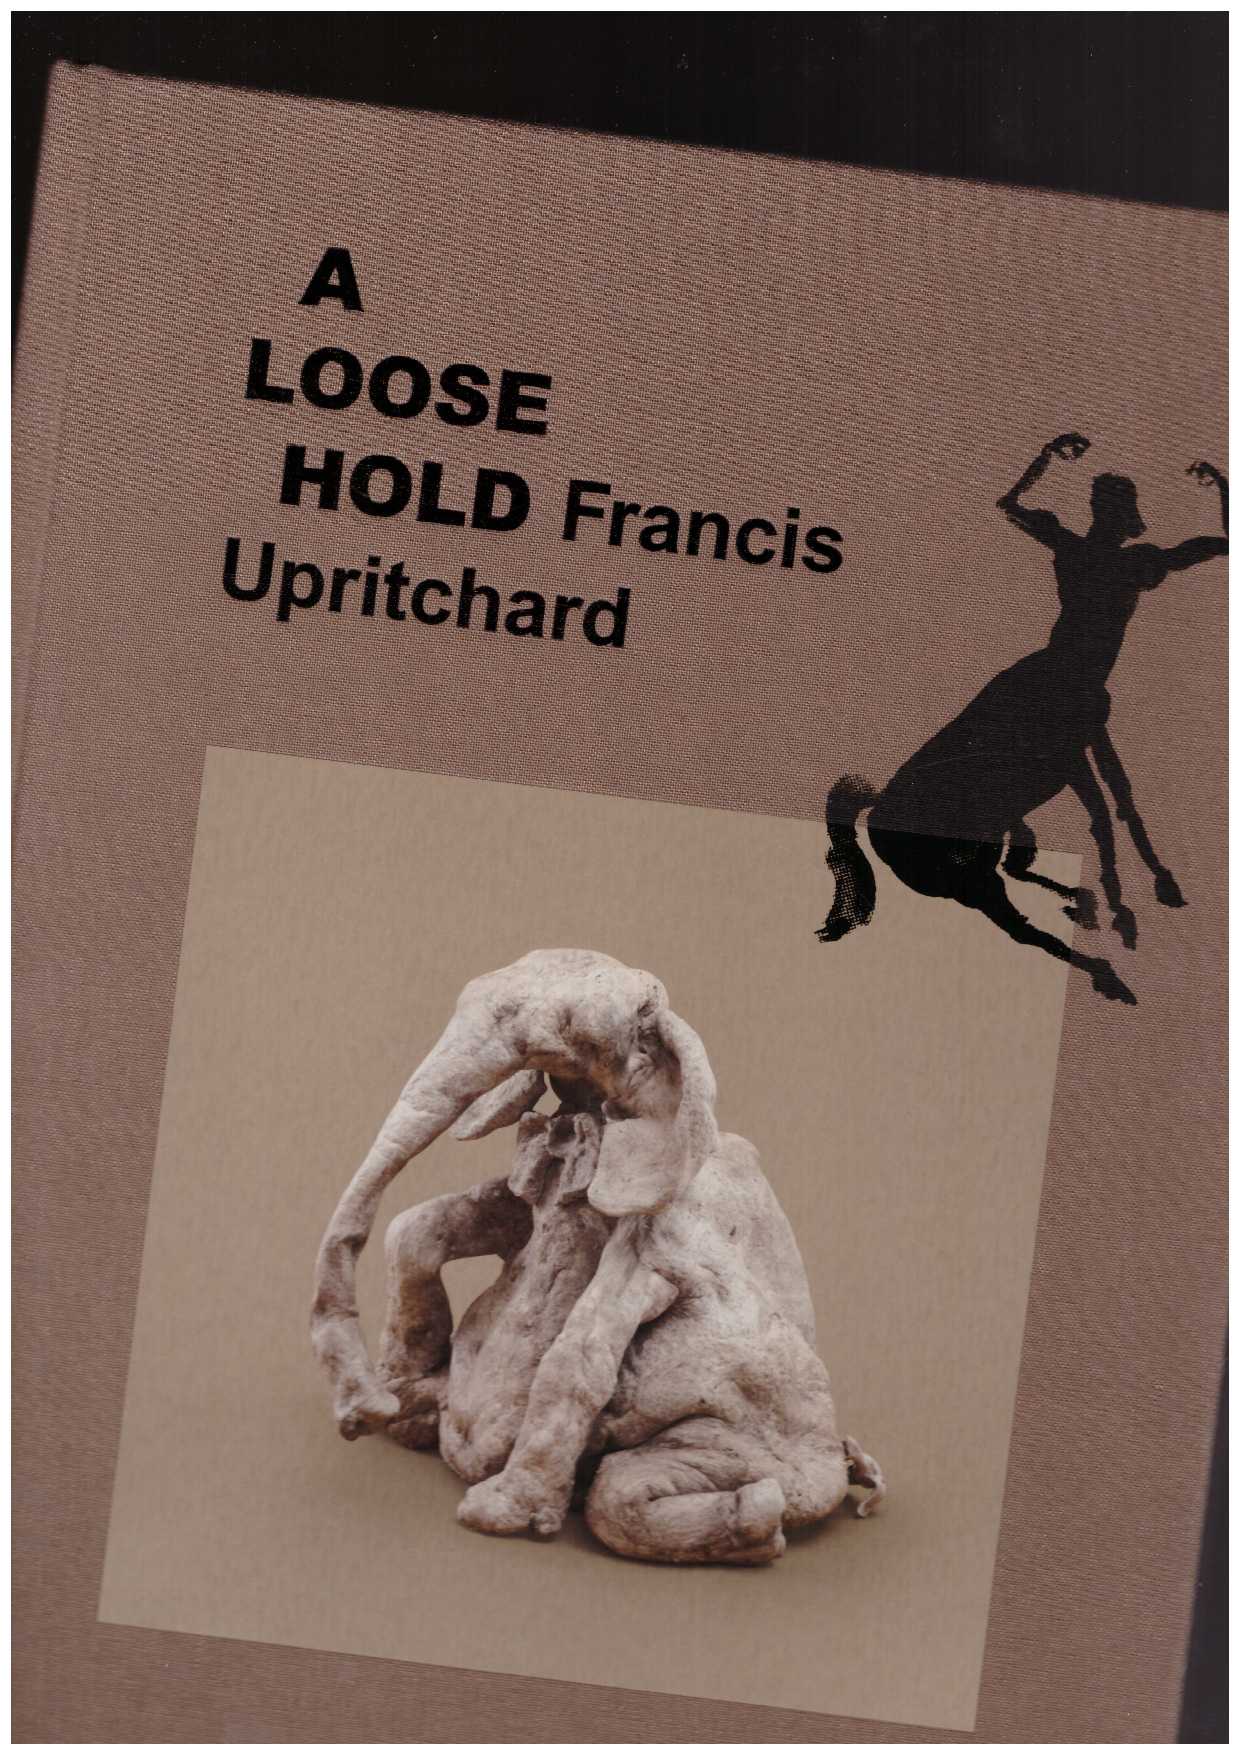 PROSSER, Simon (ed.) - Francis Upritchard. A Loose Hold